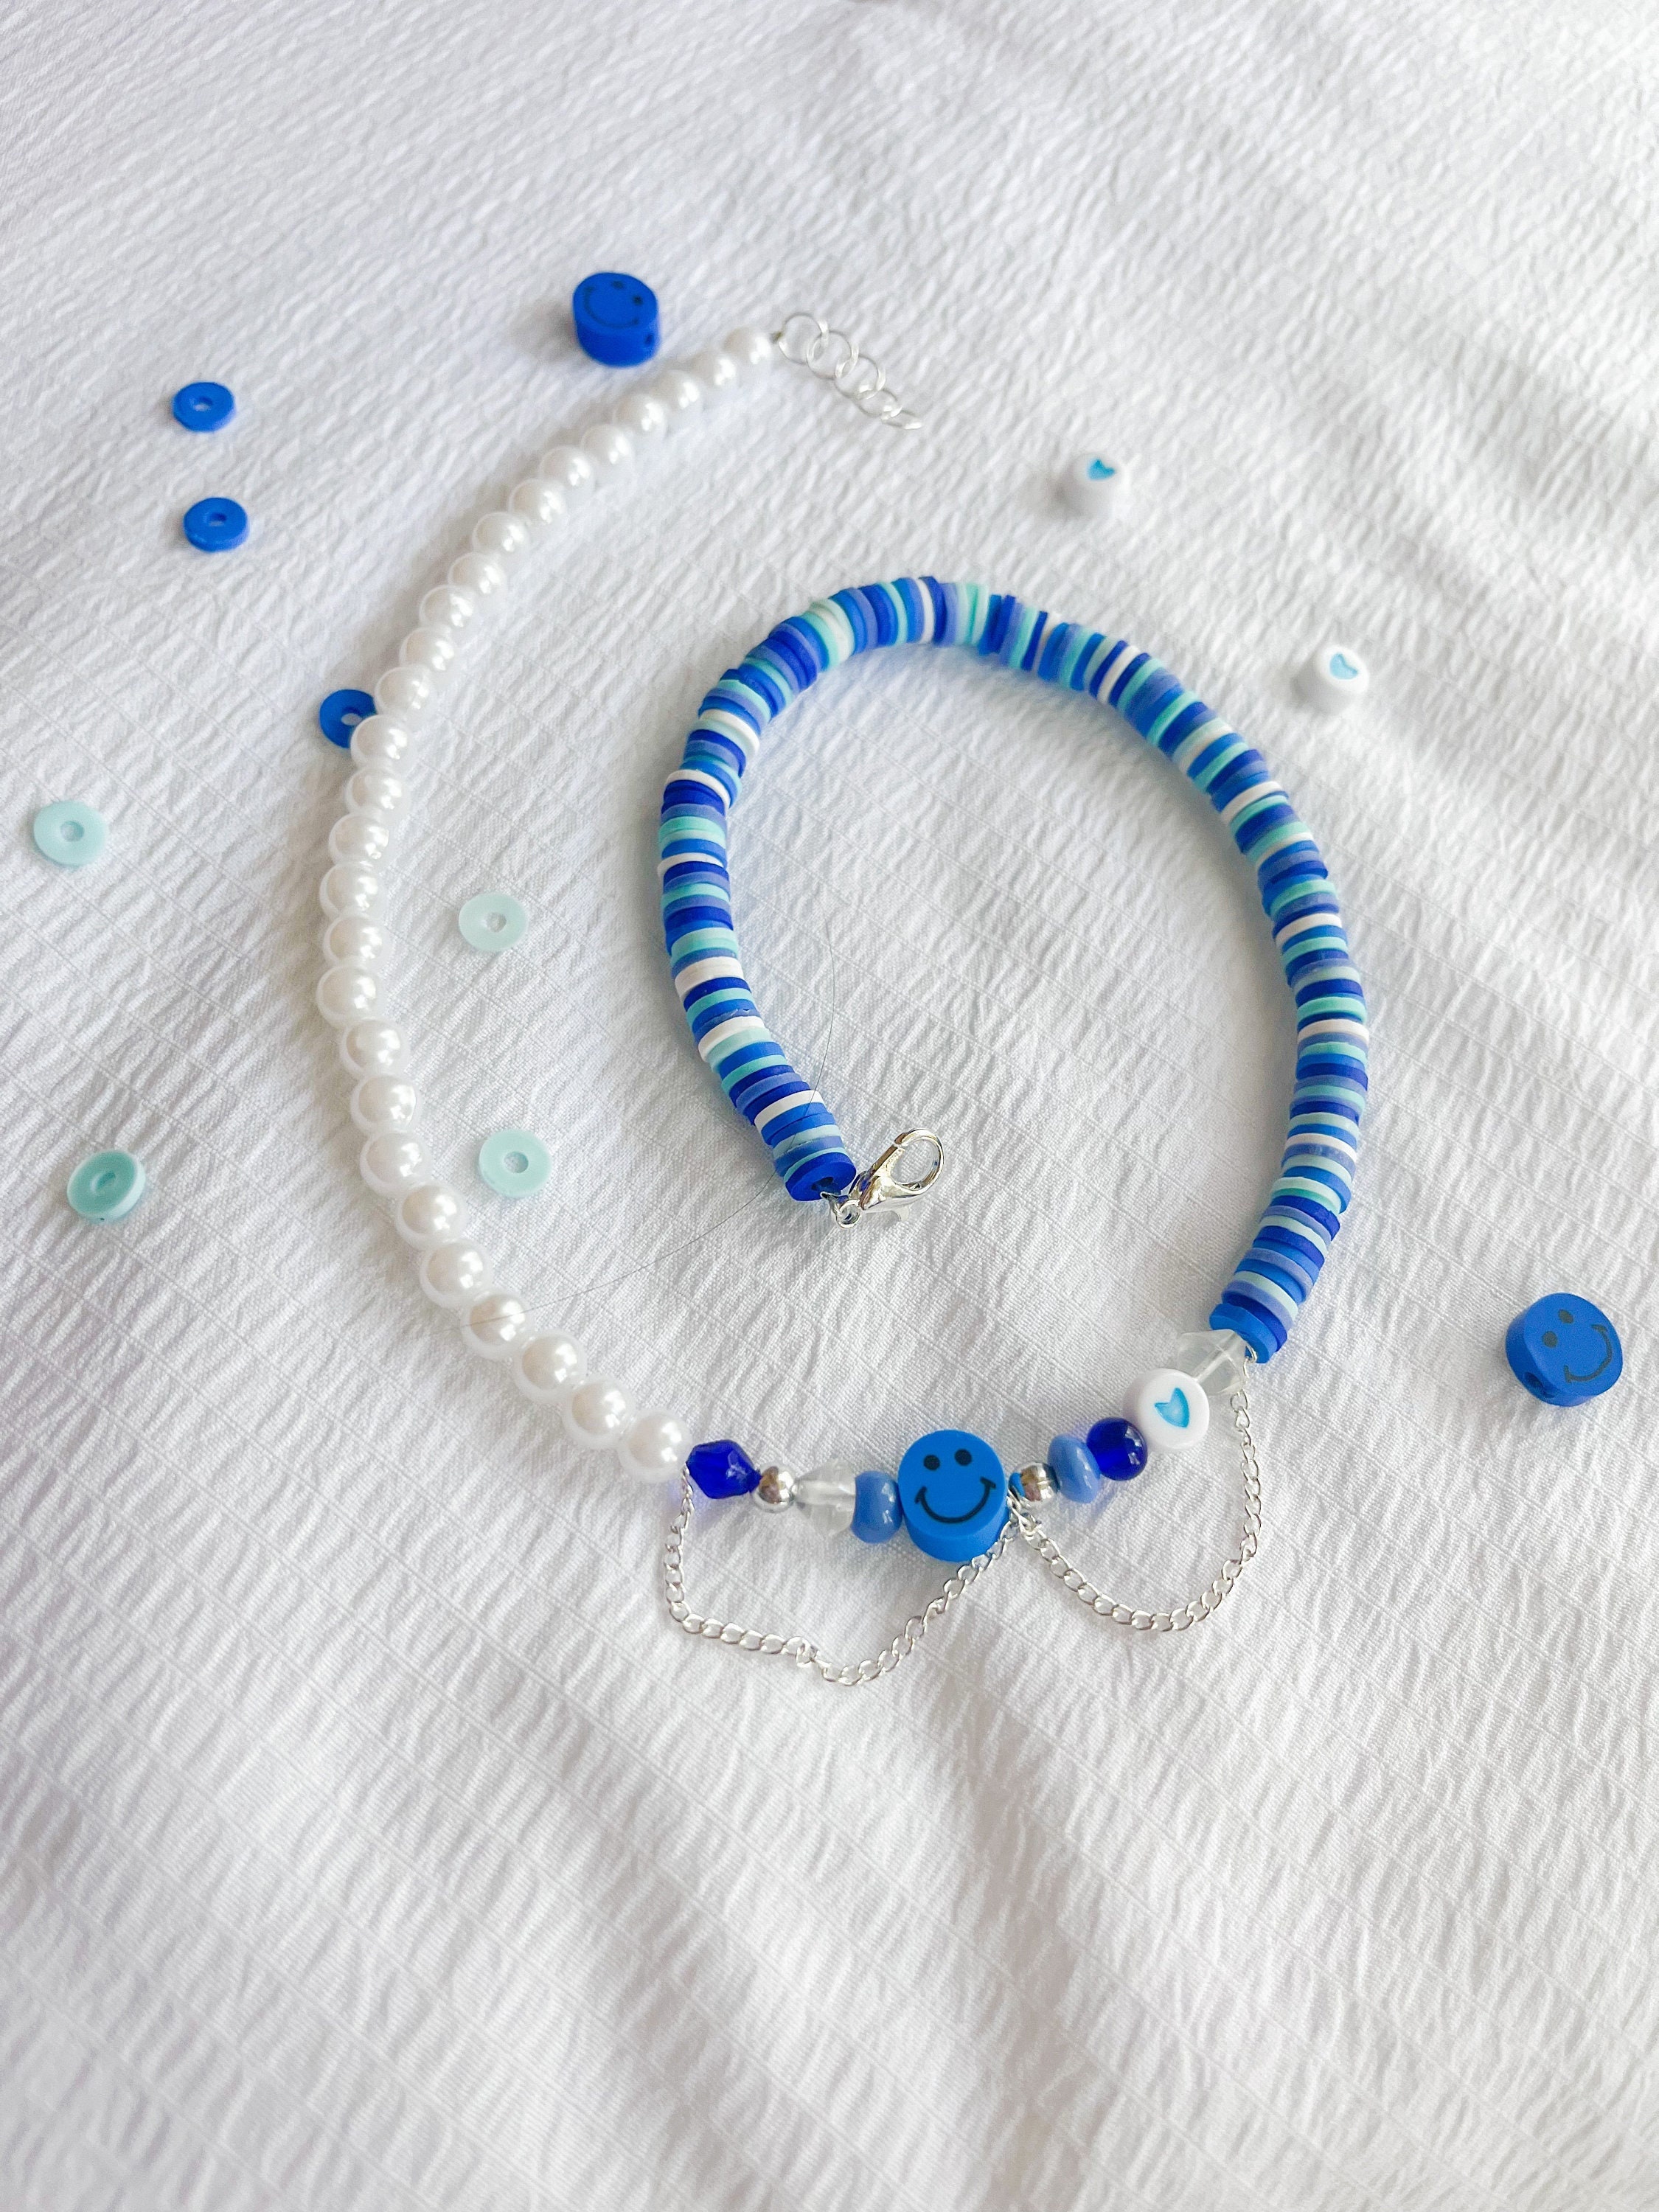 Colorful Pearl Bracelet - Happy Family Art, Pearls For Bracelet Making -  valleyresorts.co.uk